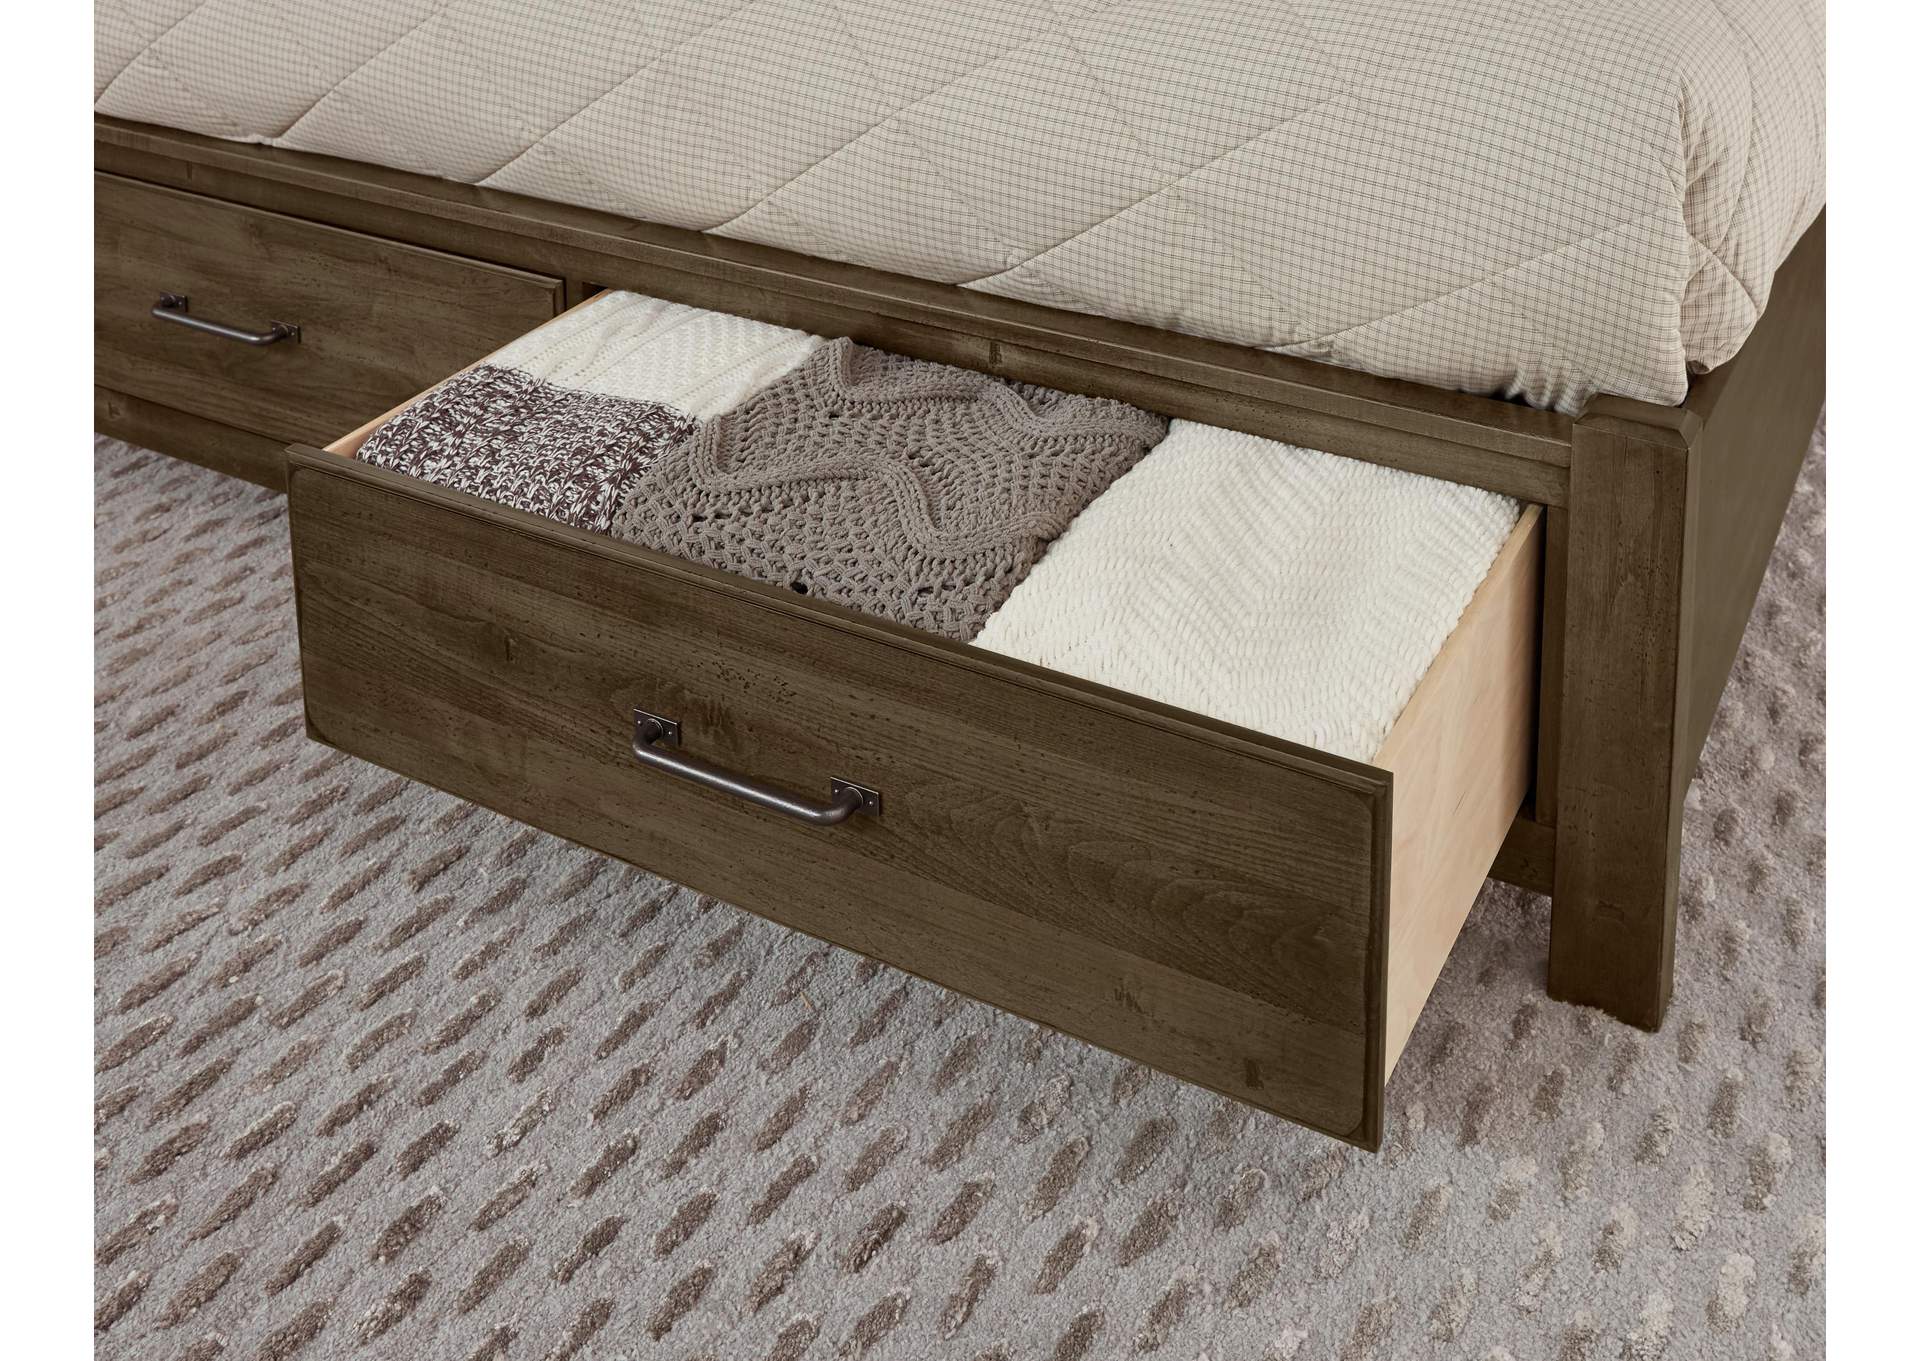 Cool Rustic Mink Queen Mansion Bed w/ Footboard Storage,Vaughan-Bassett